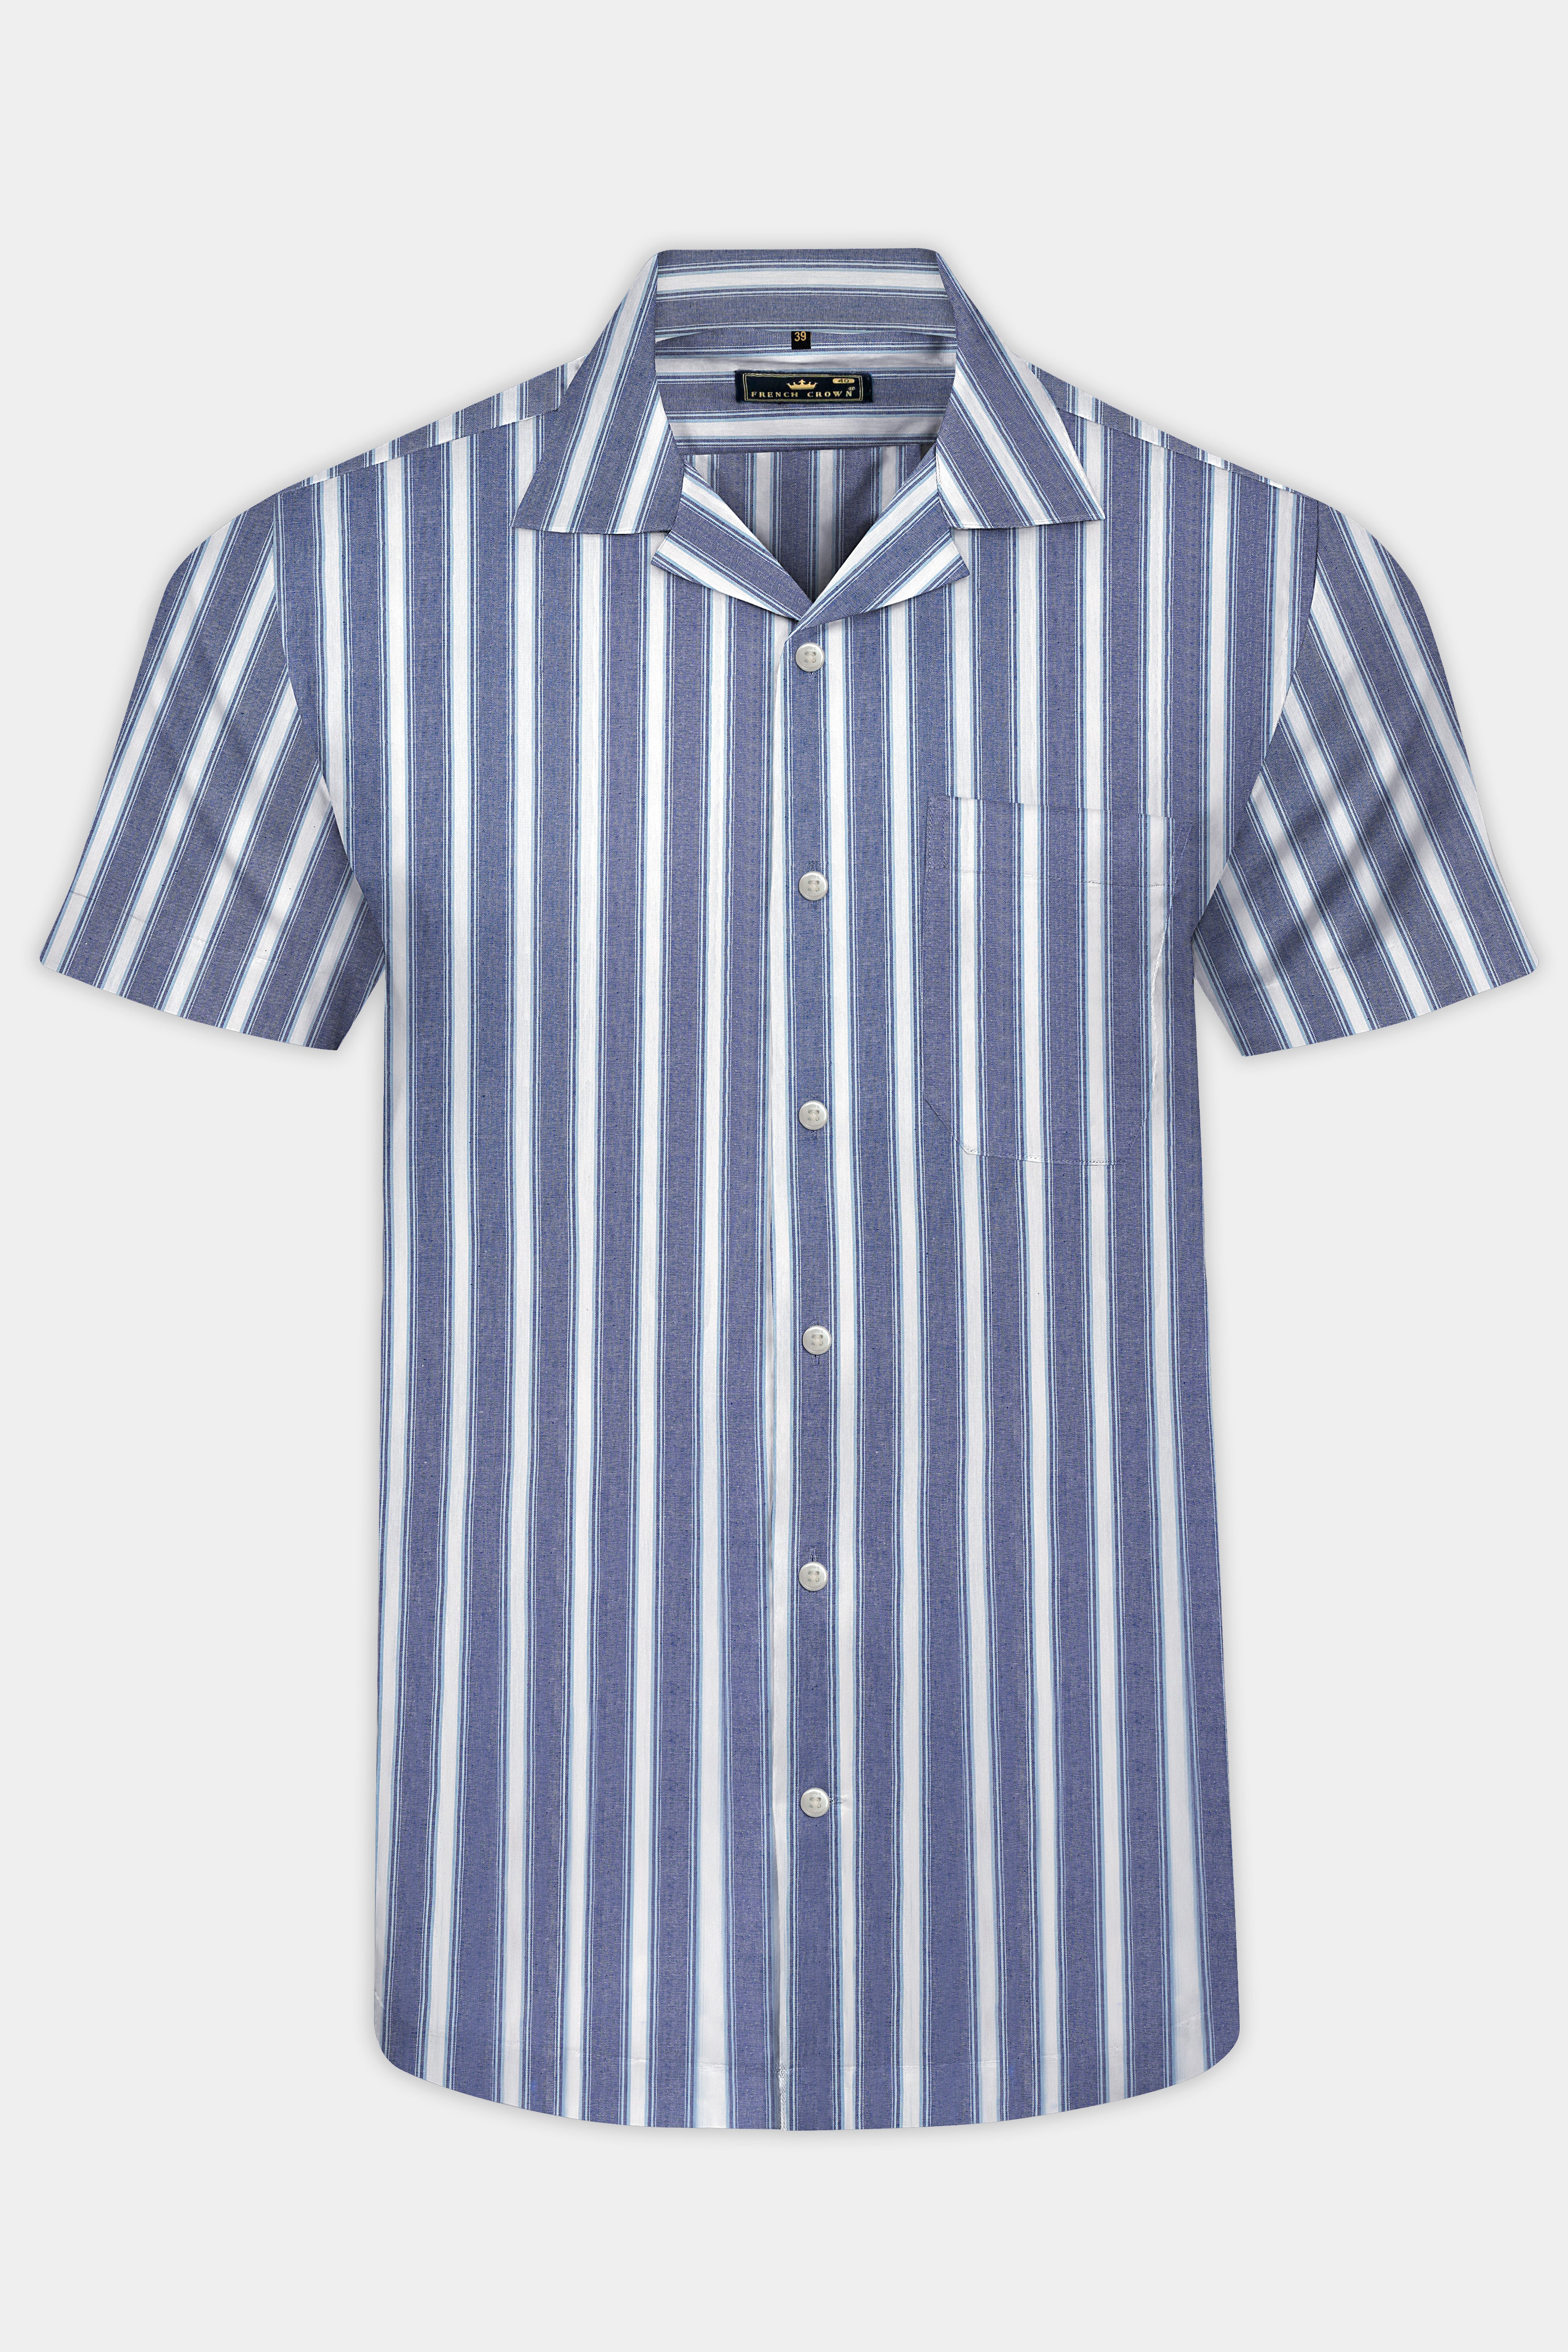 Manatee Grey Striped Royal Oxford Shirt